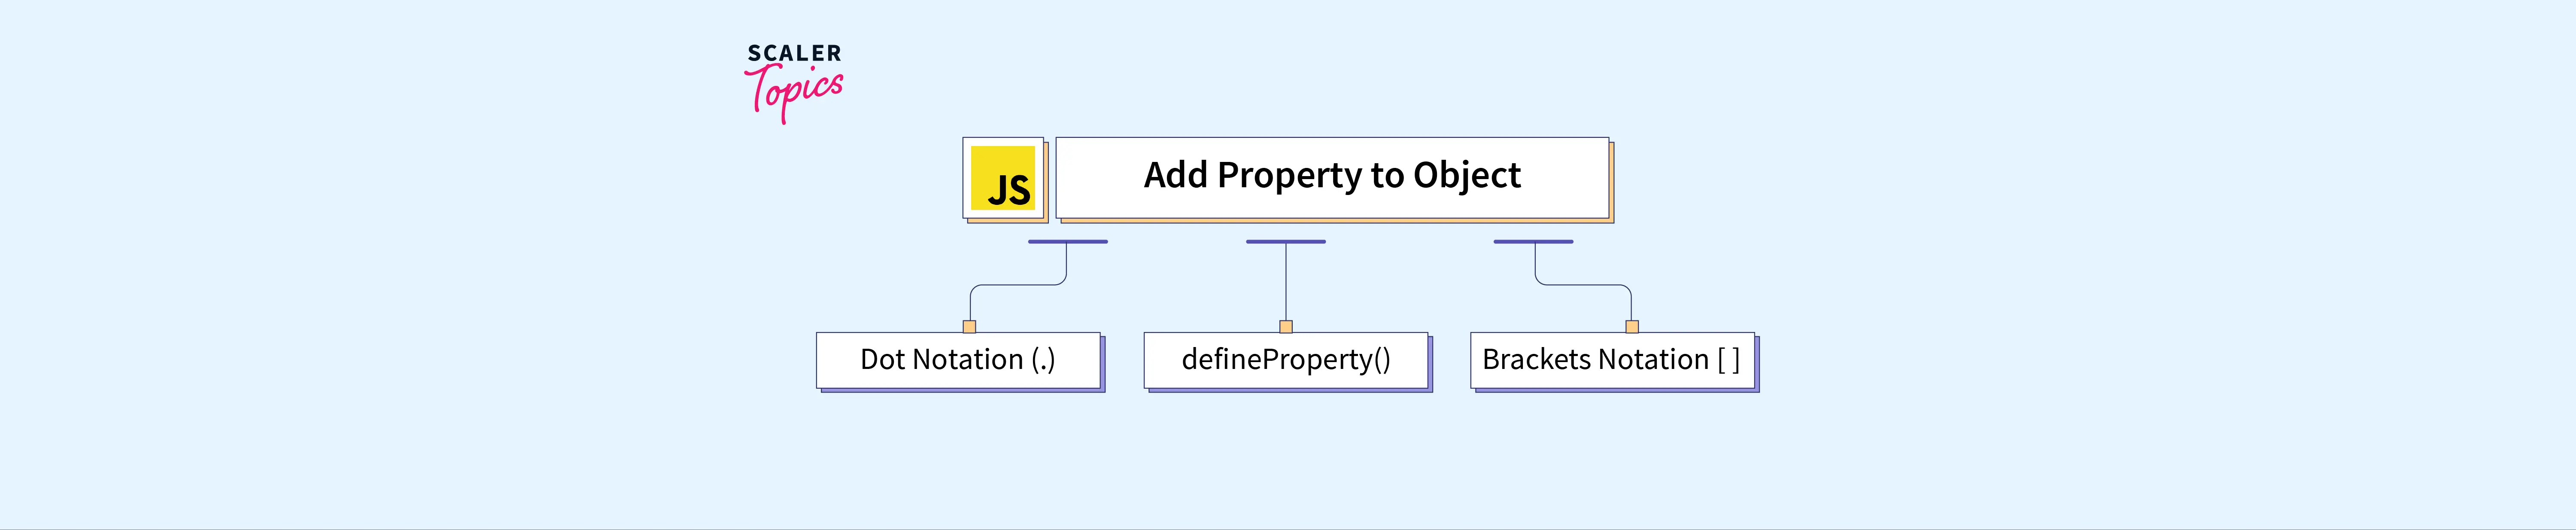 Add Property To Object Javascript Fi.webp